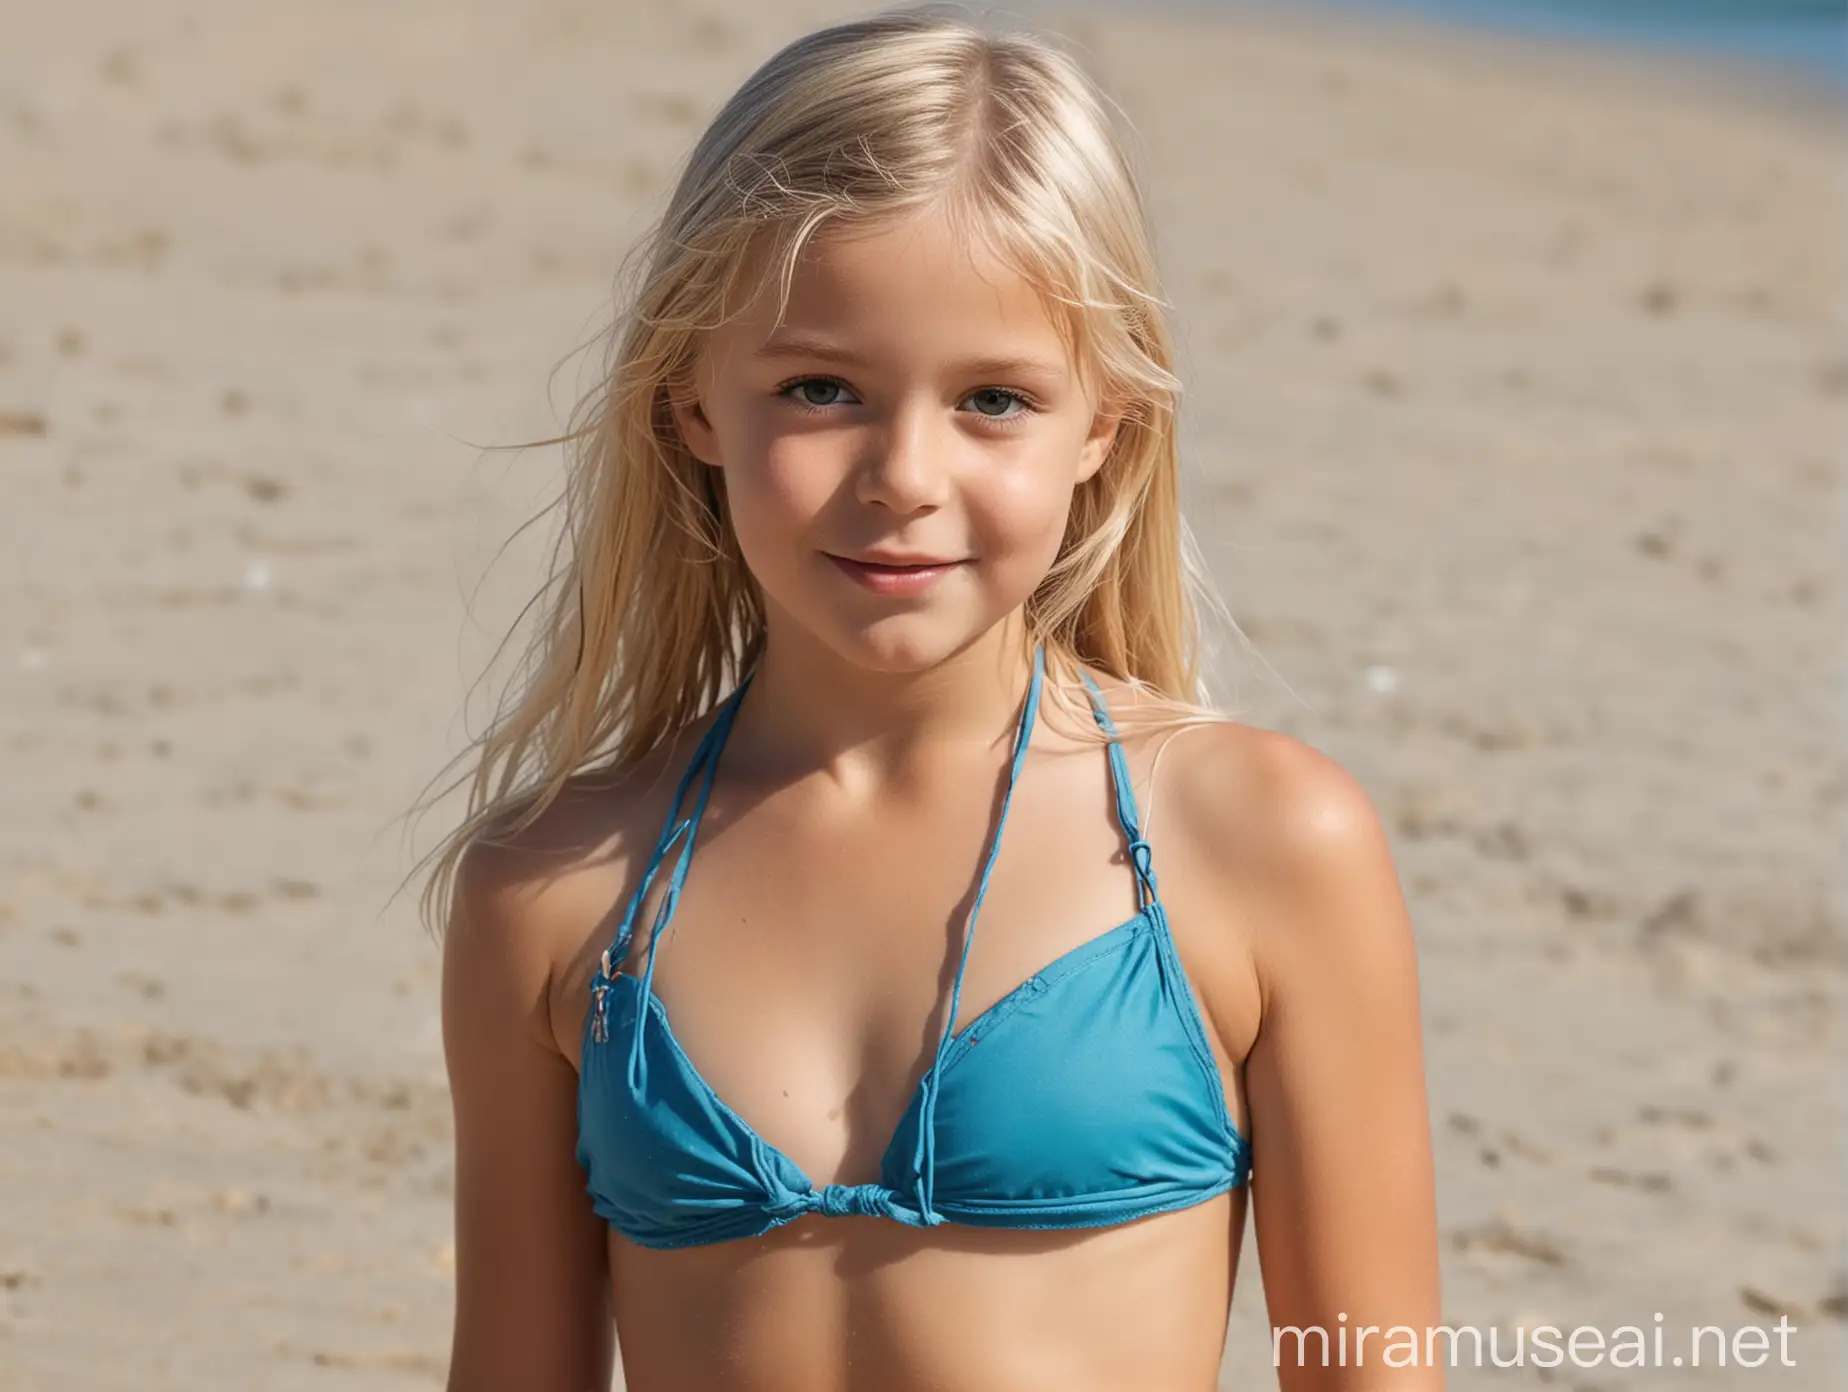 10 year blond girl with blue bikini at the beach